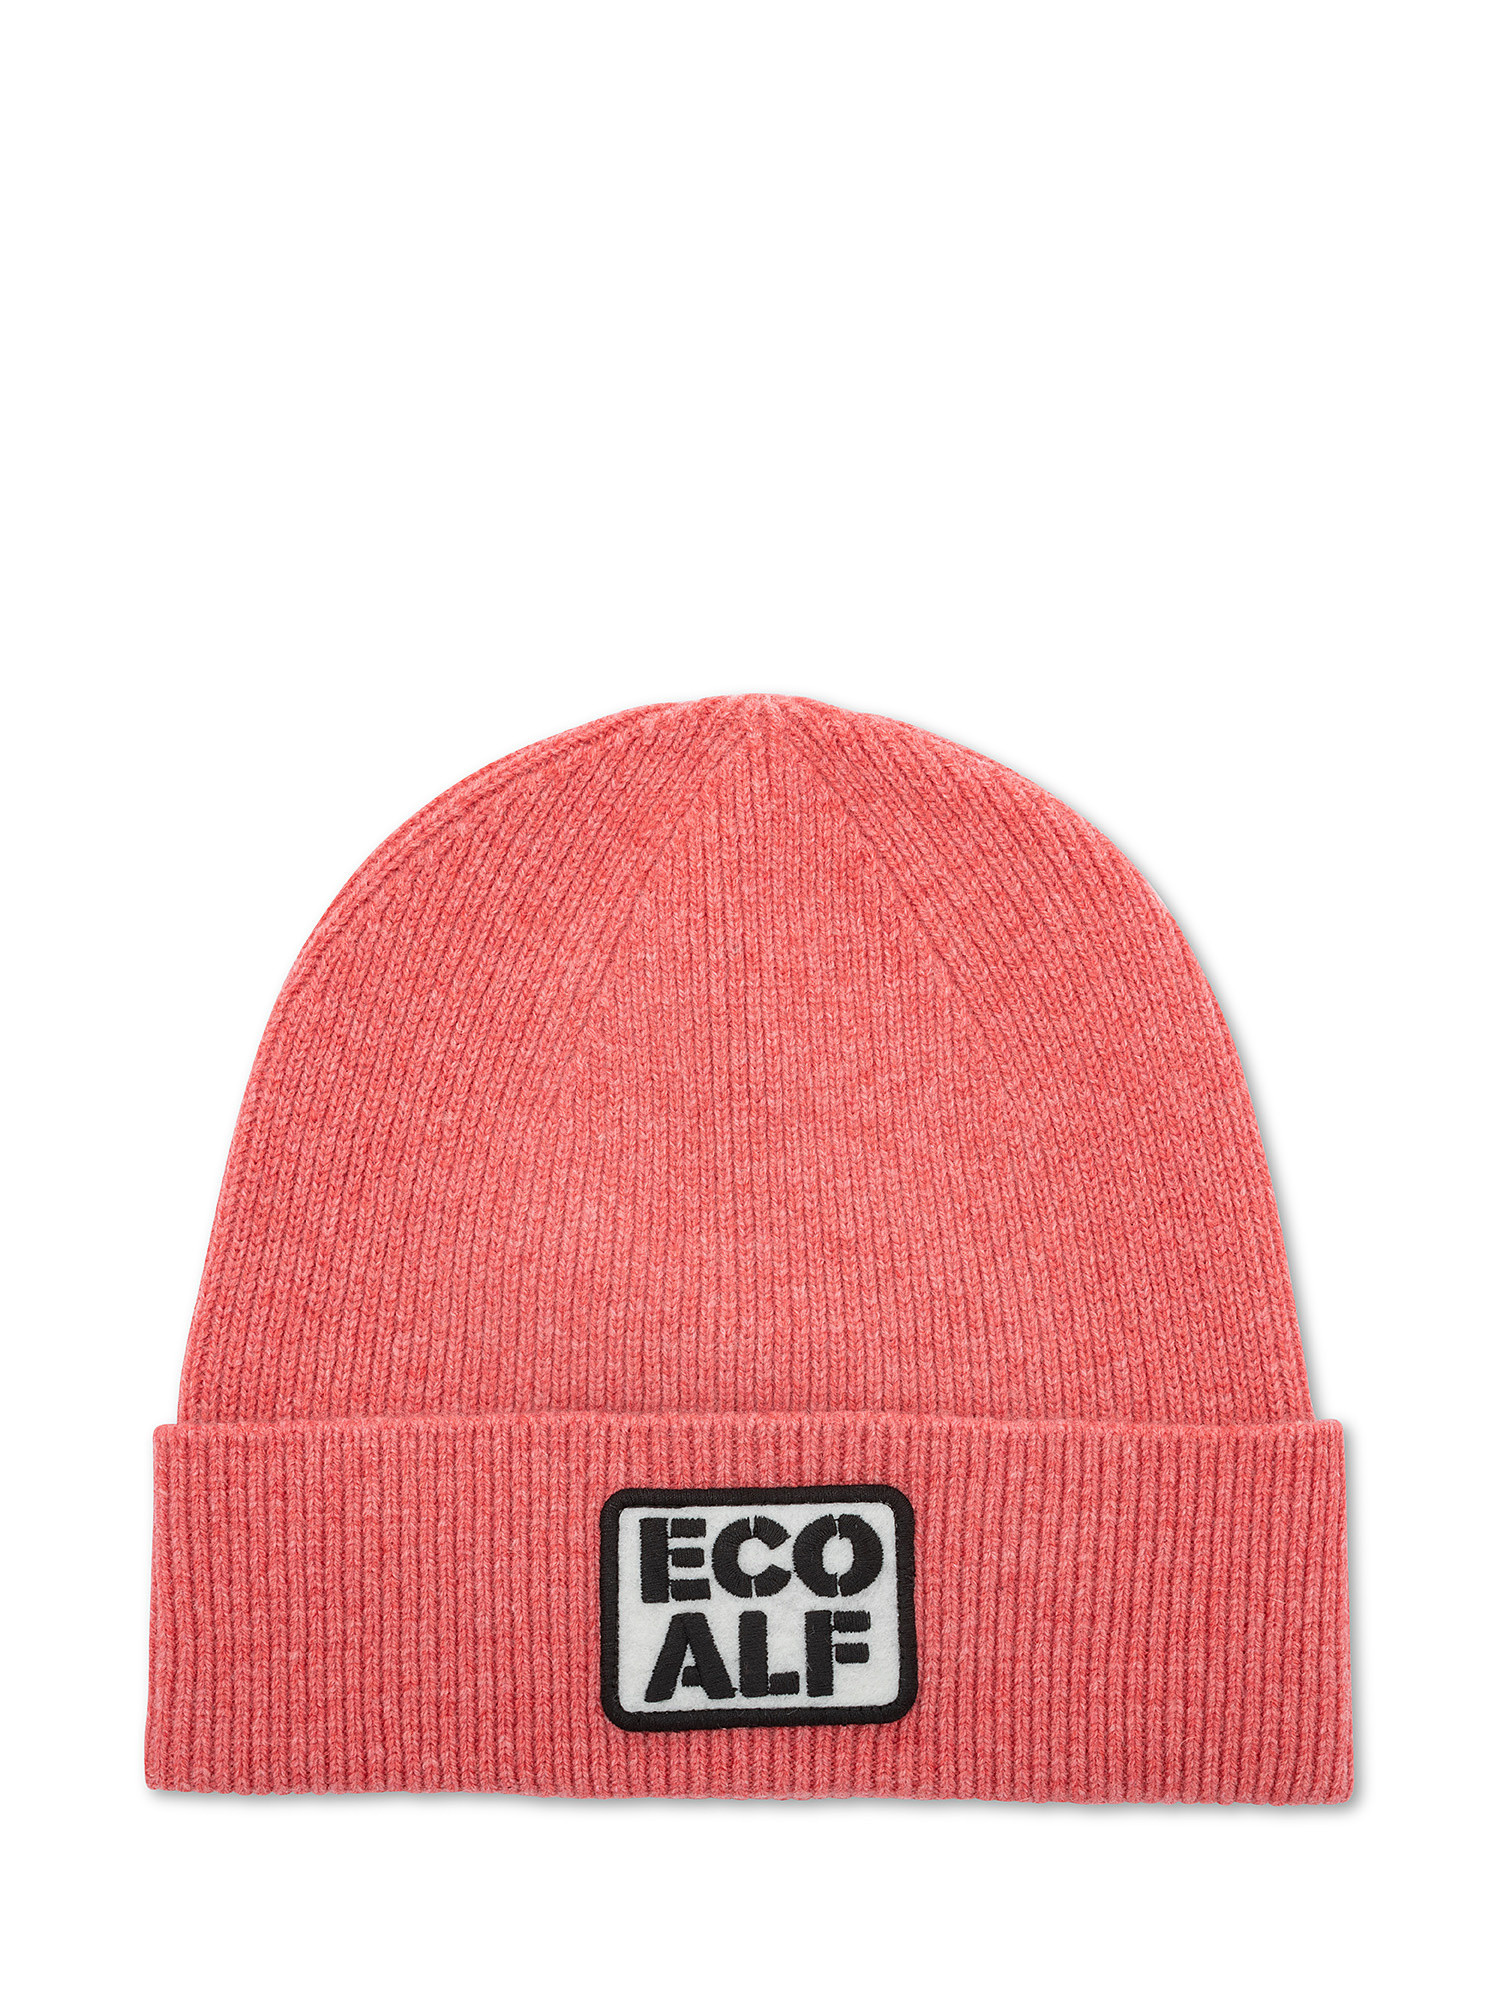 Ecoalf - Cappello con logo, Rosa scuro, large image number 0